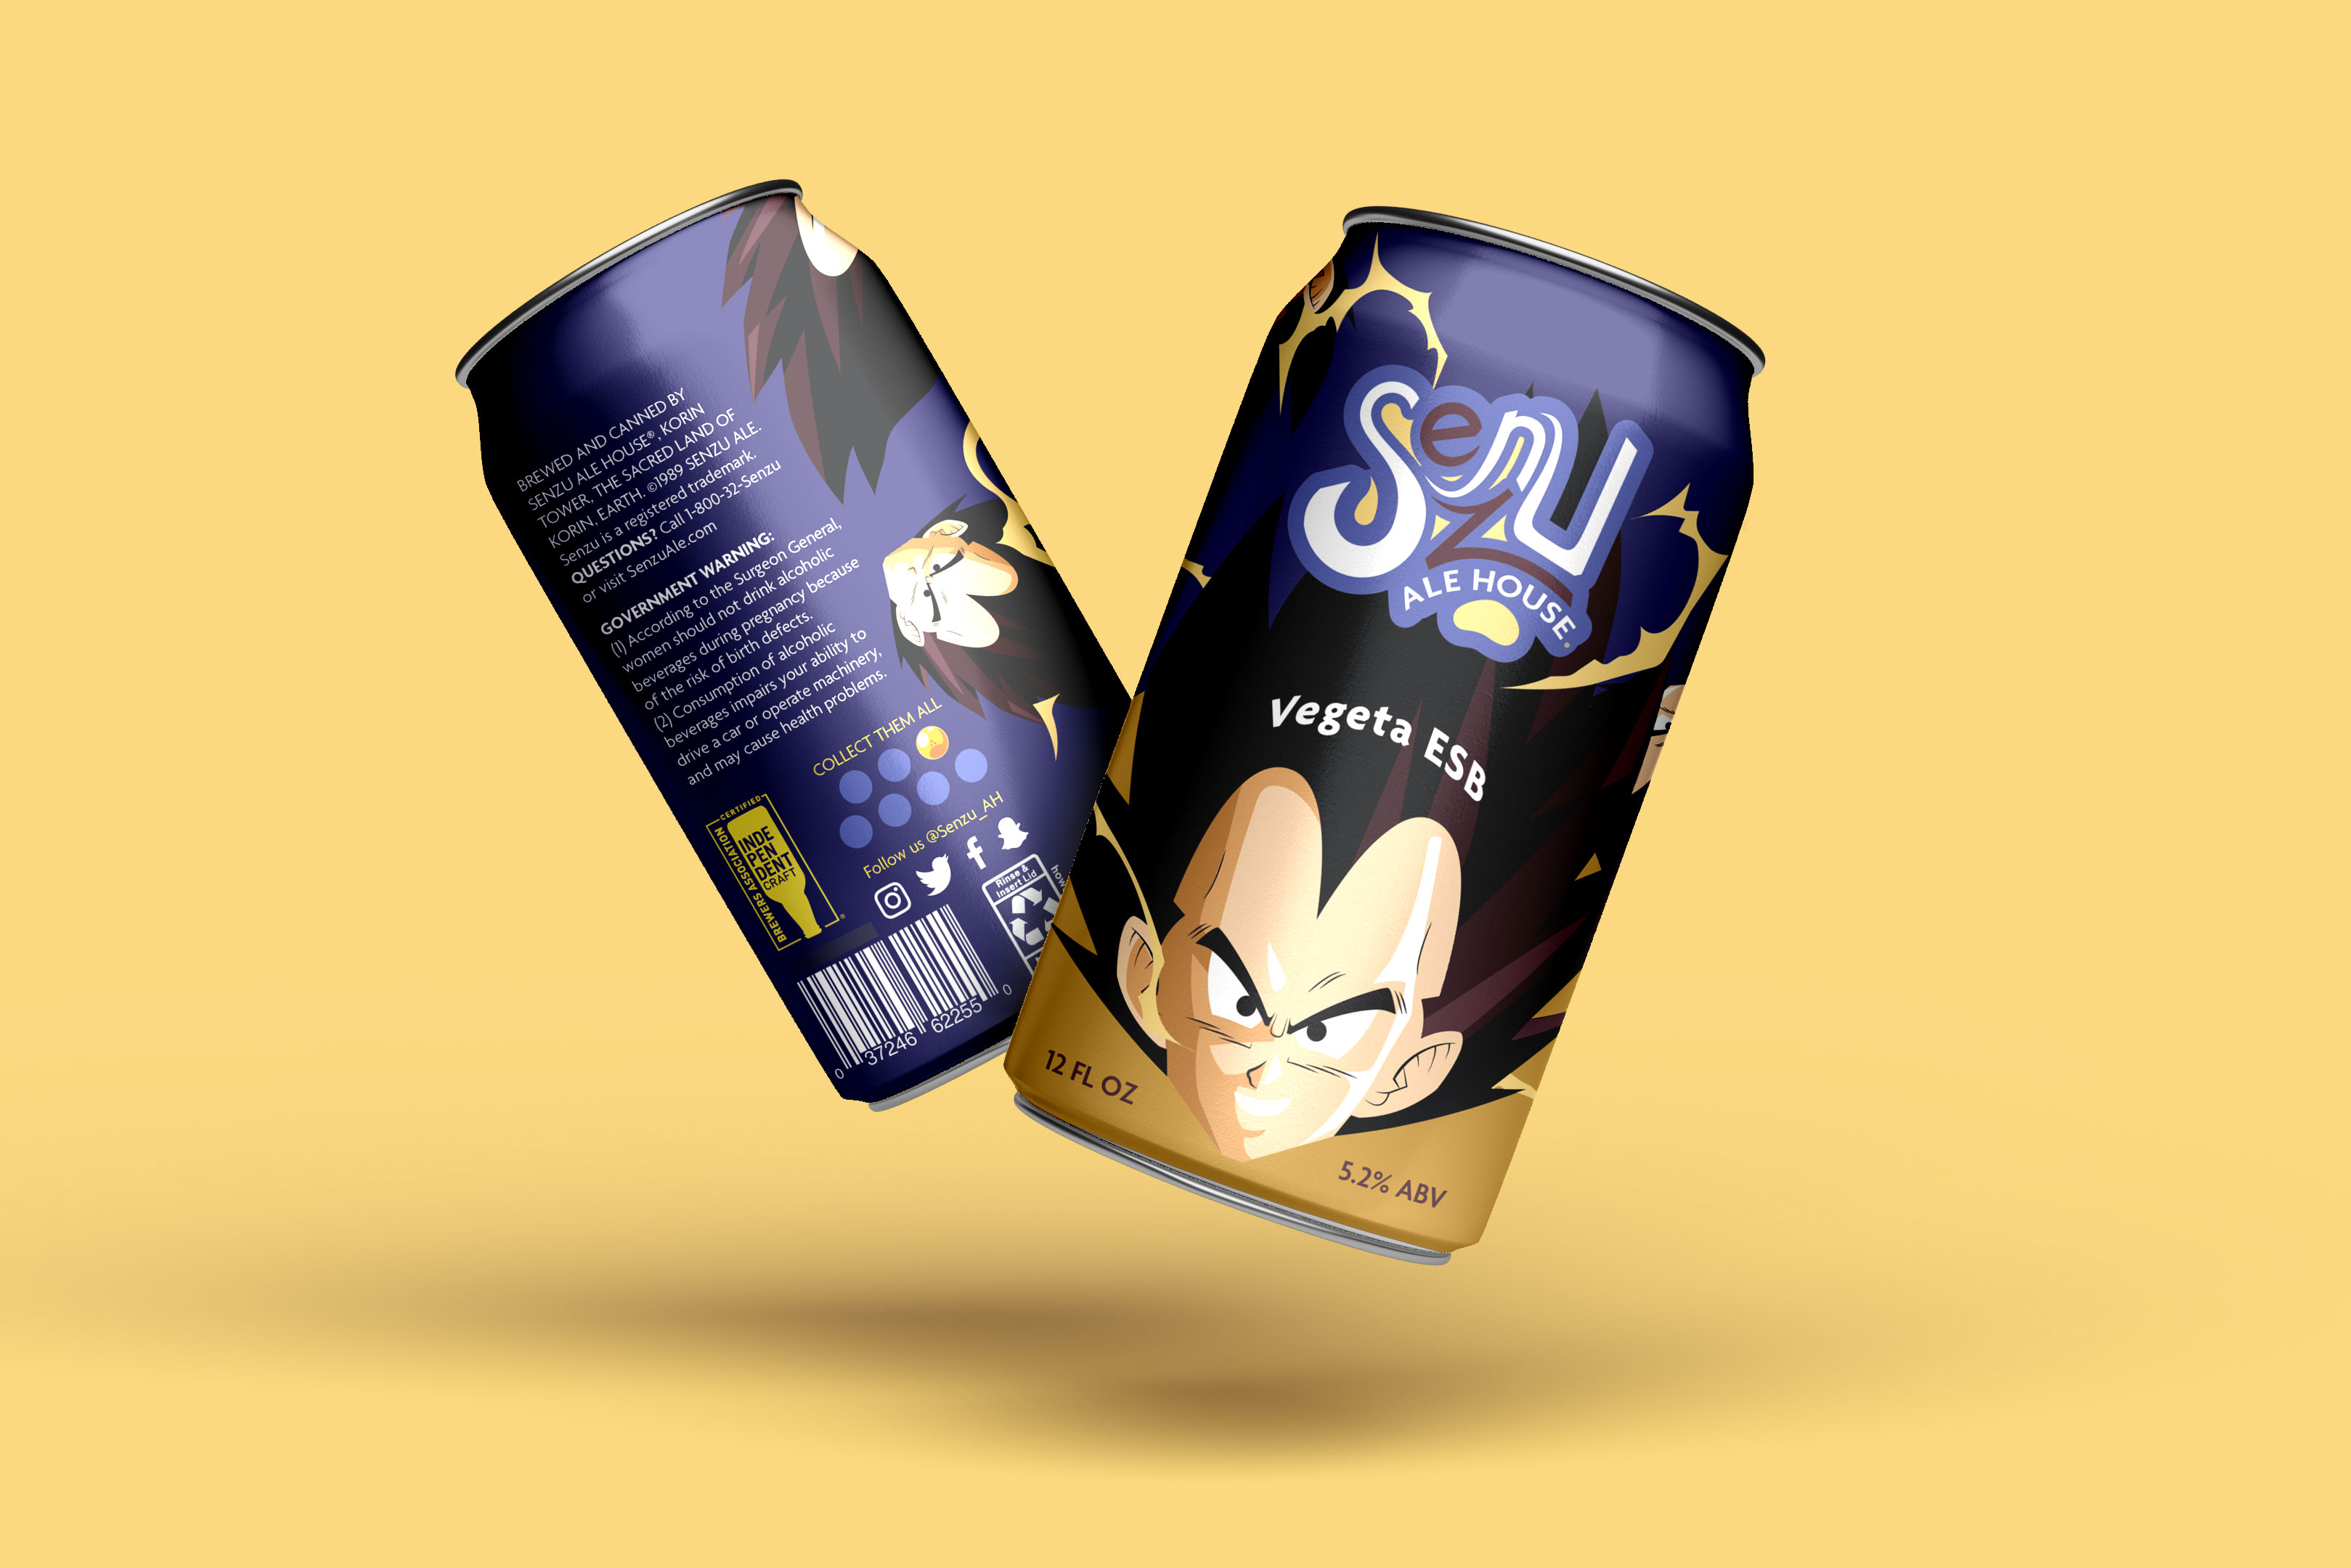 Senzu Ale House beer cans